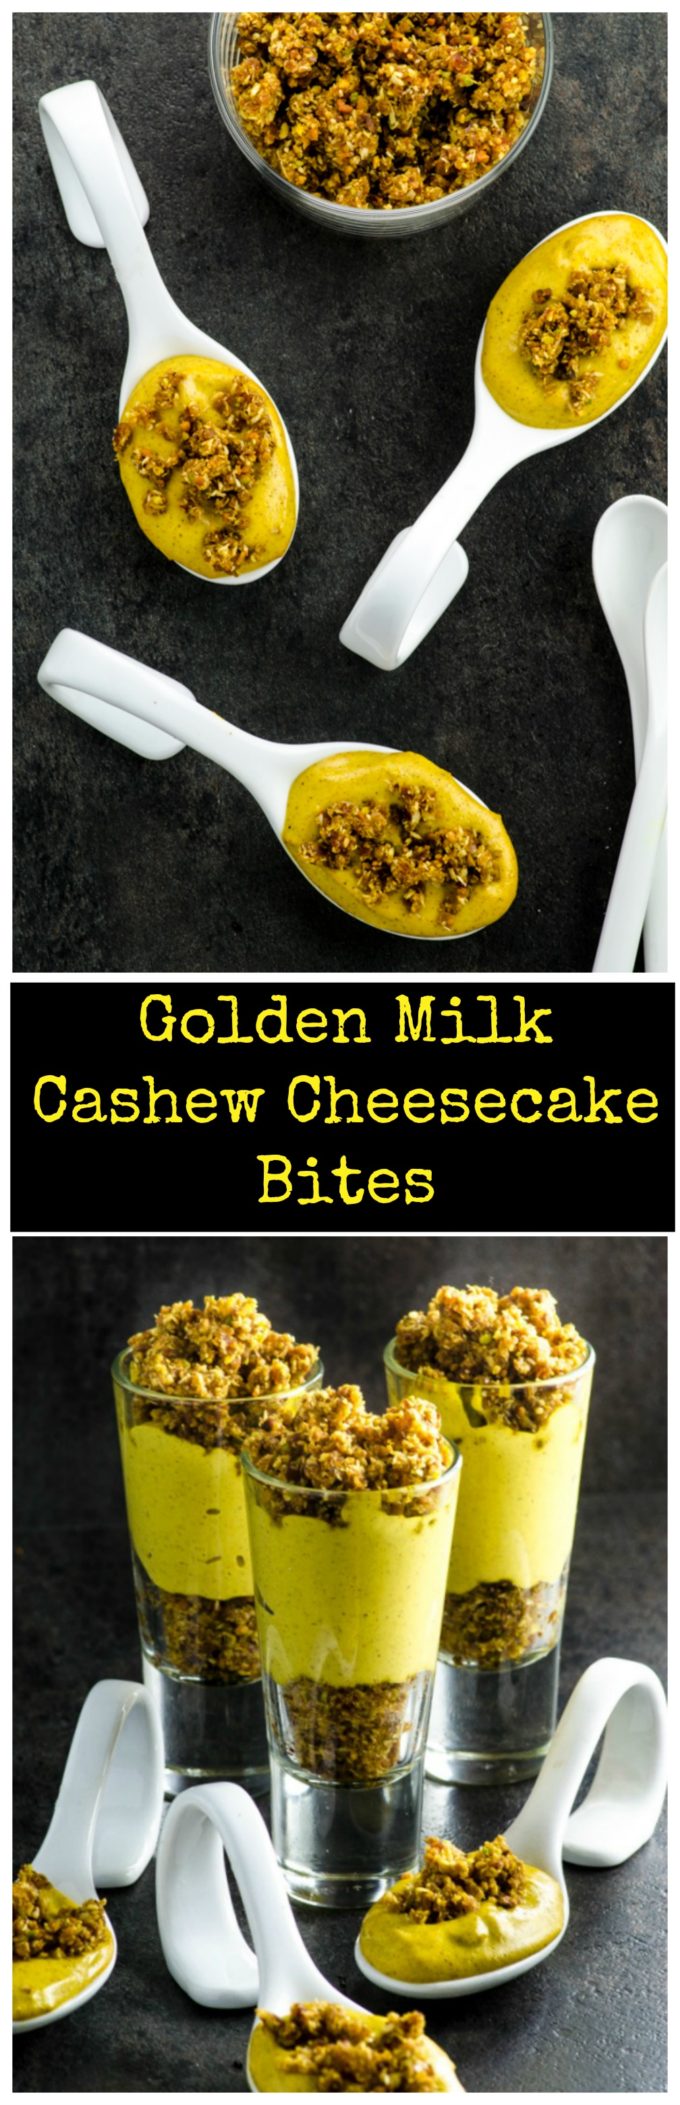 Golden Milk Cashew Cheesecake Bites